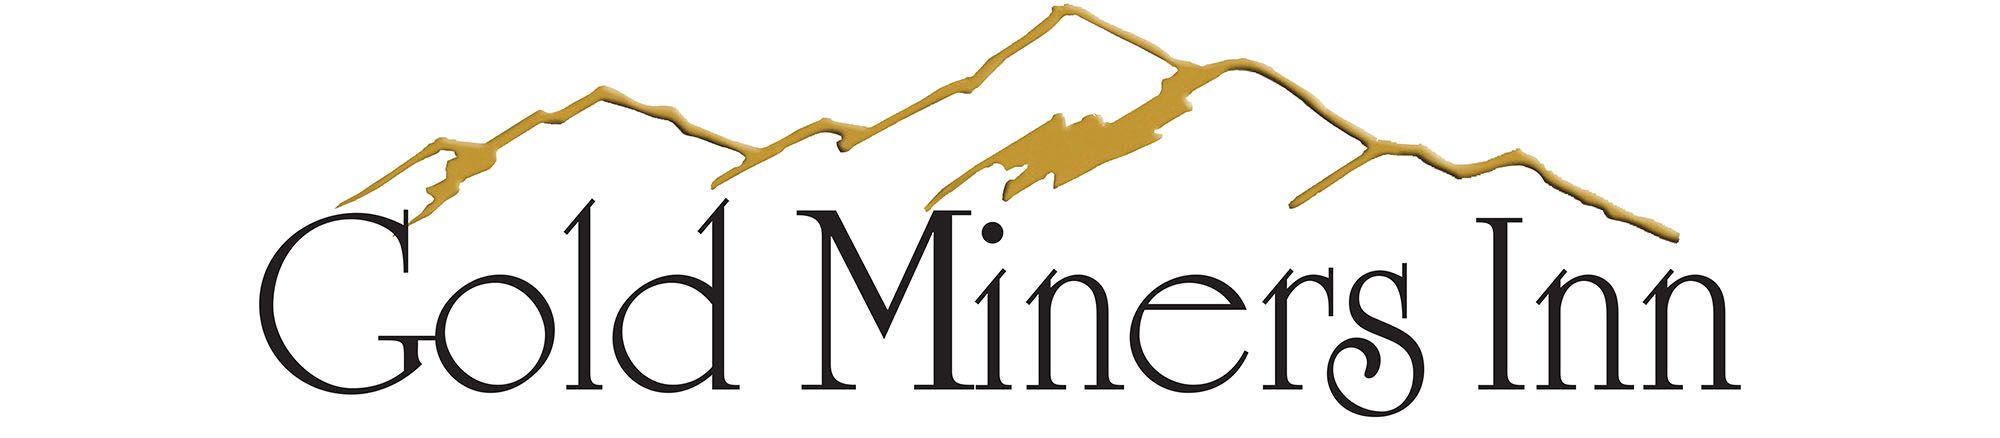 Gold Mining Logo - Grass Valley Hotels. Hotels in Grass Valley CA